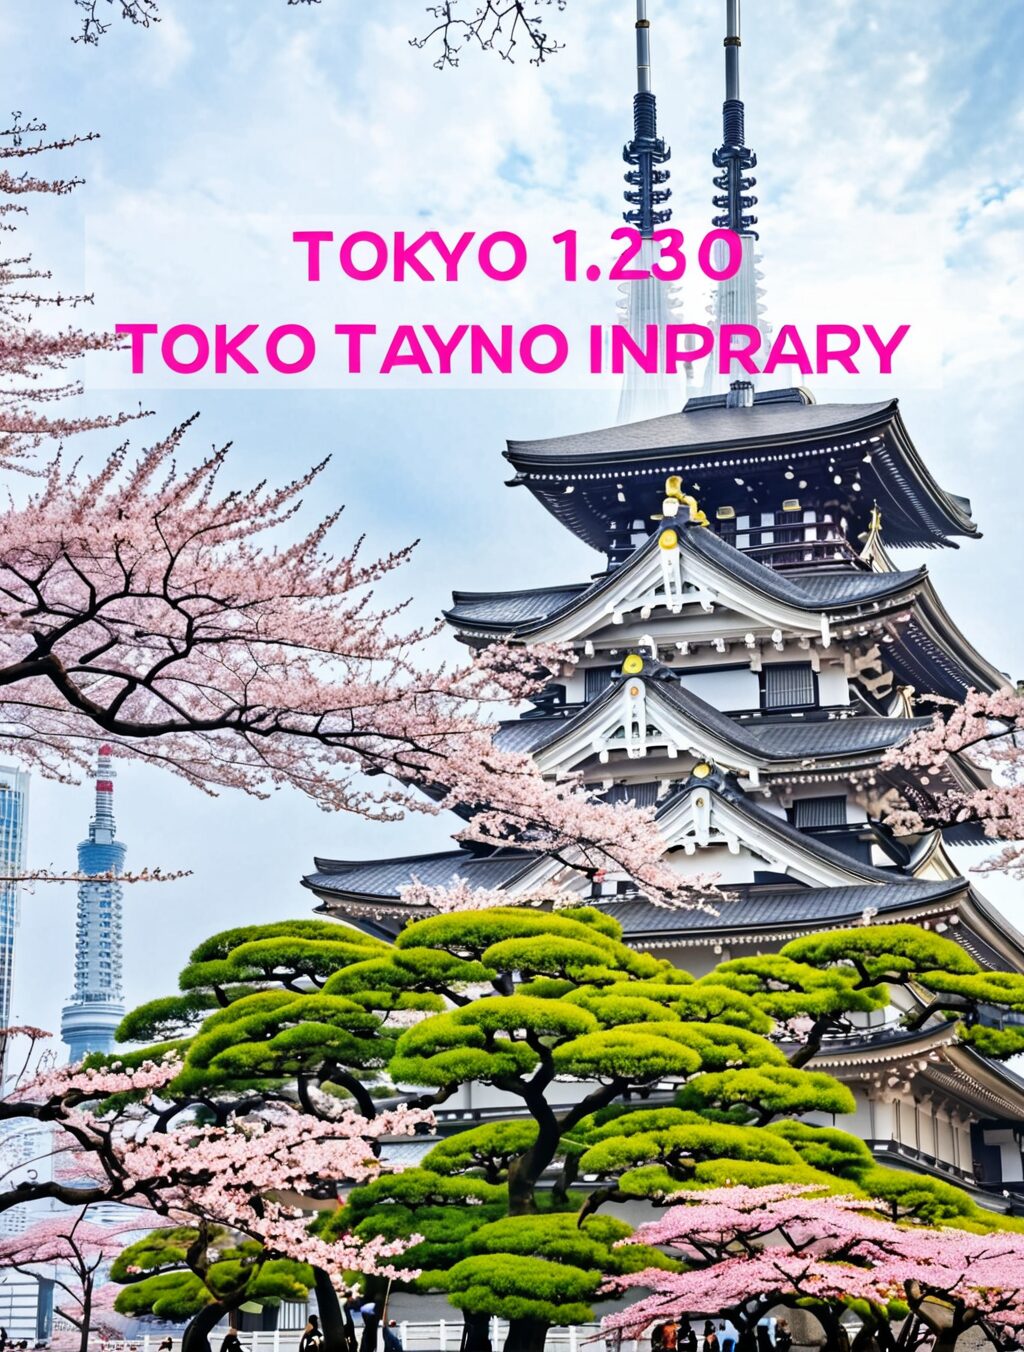 tokyo japan itinerary 4 days